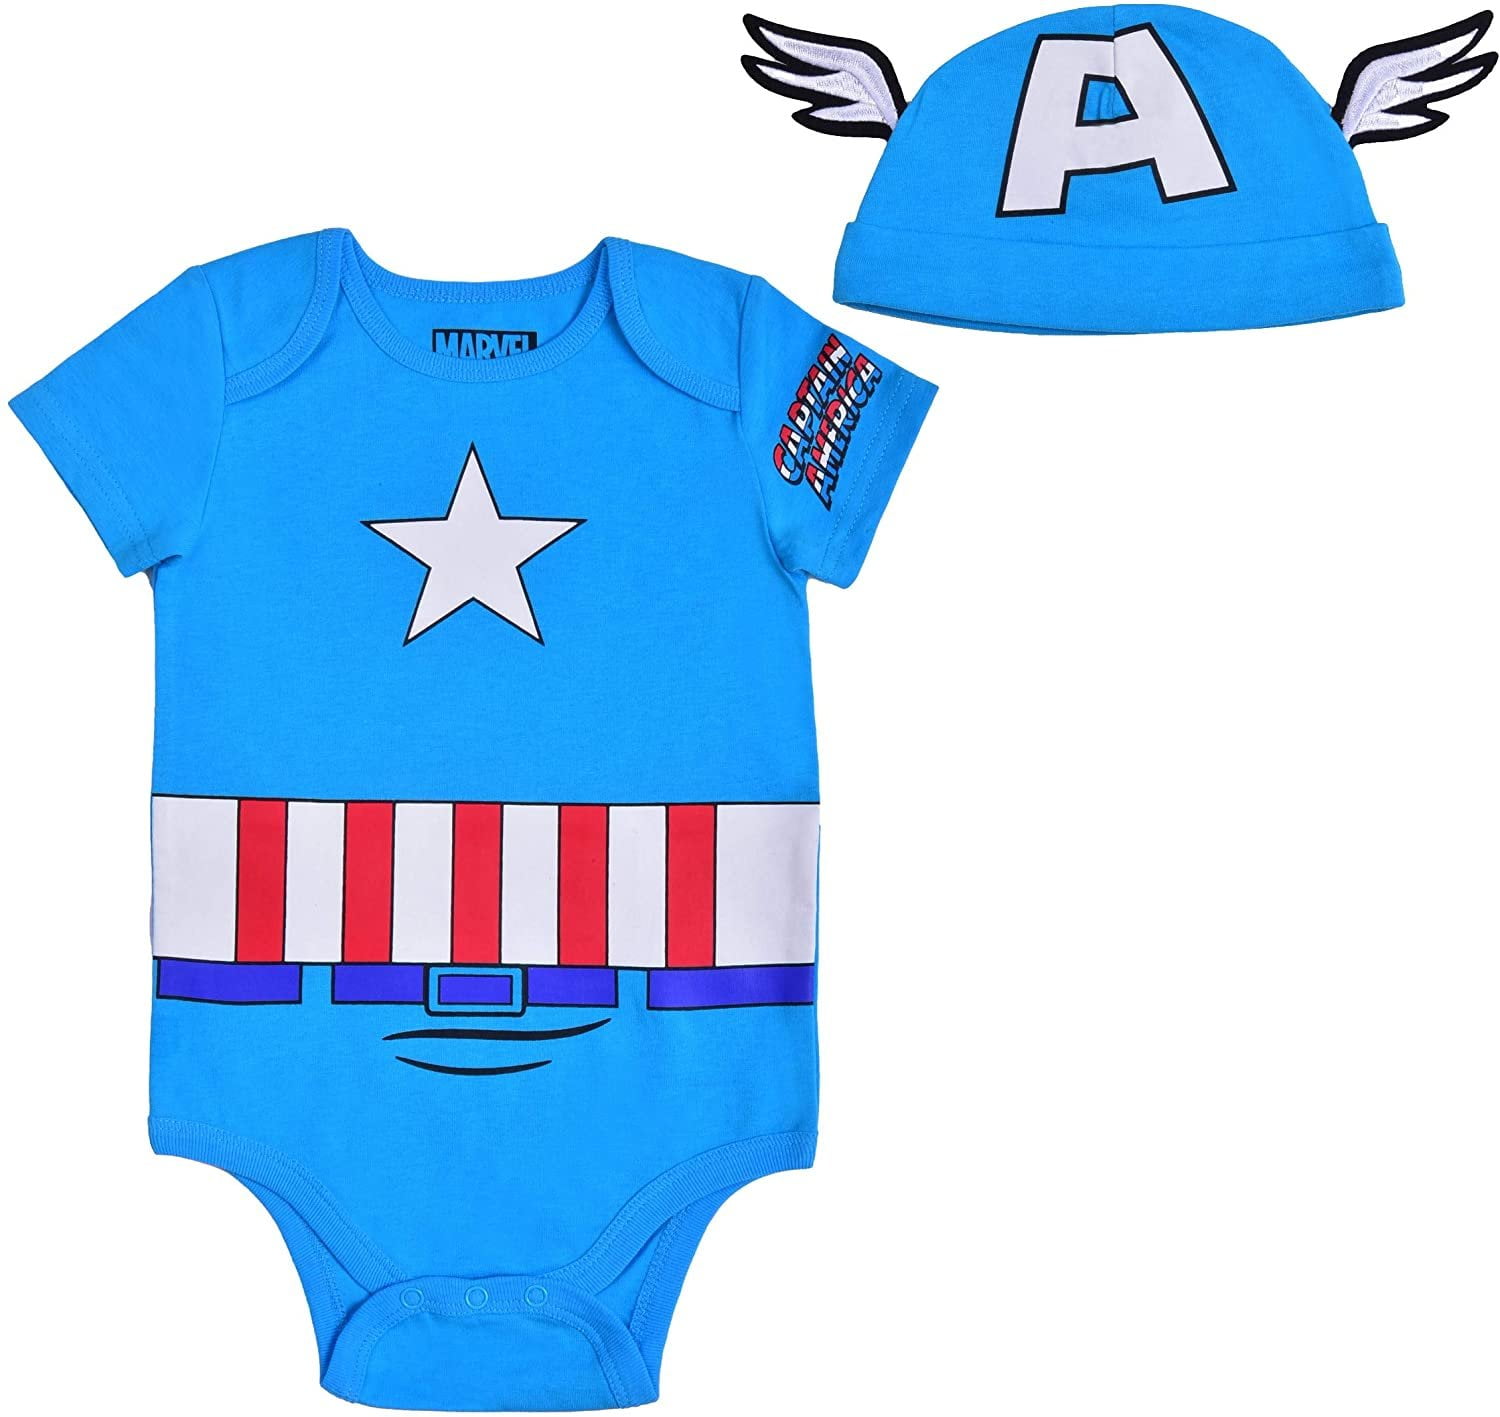 Avengers Short Onesie with Cap, Captain America Bodysuit, Baby Romper Size 18M Blue - Walmart.com